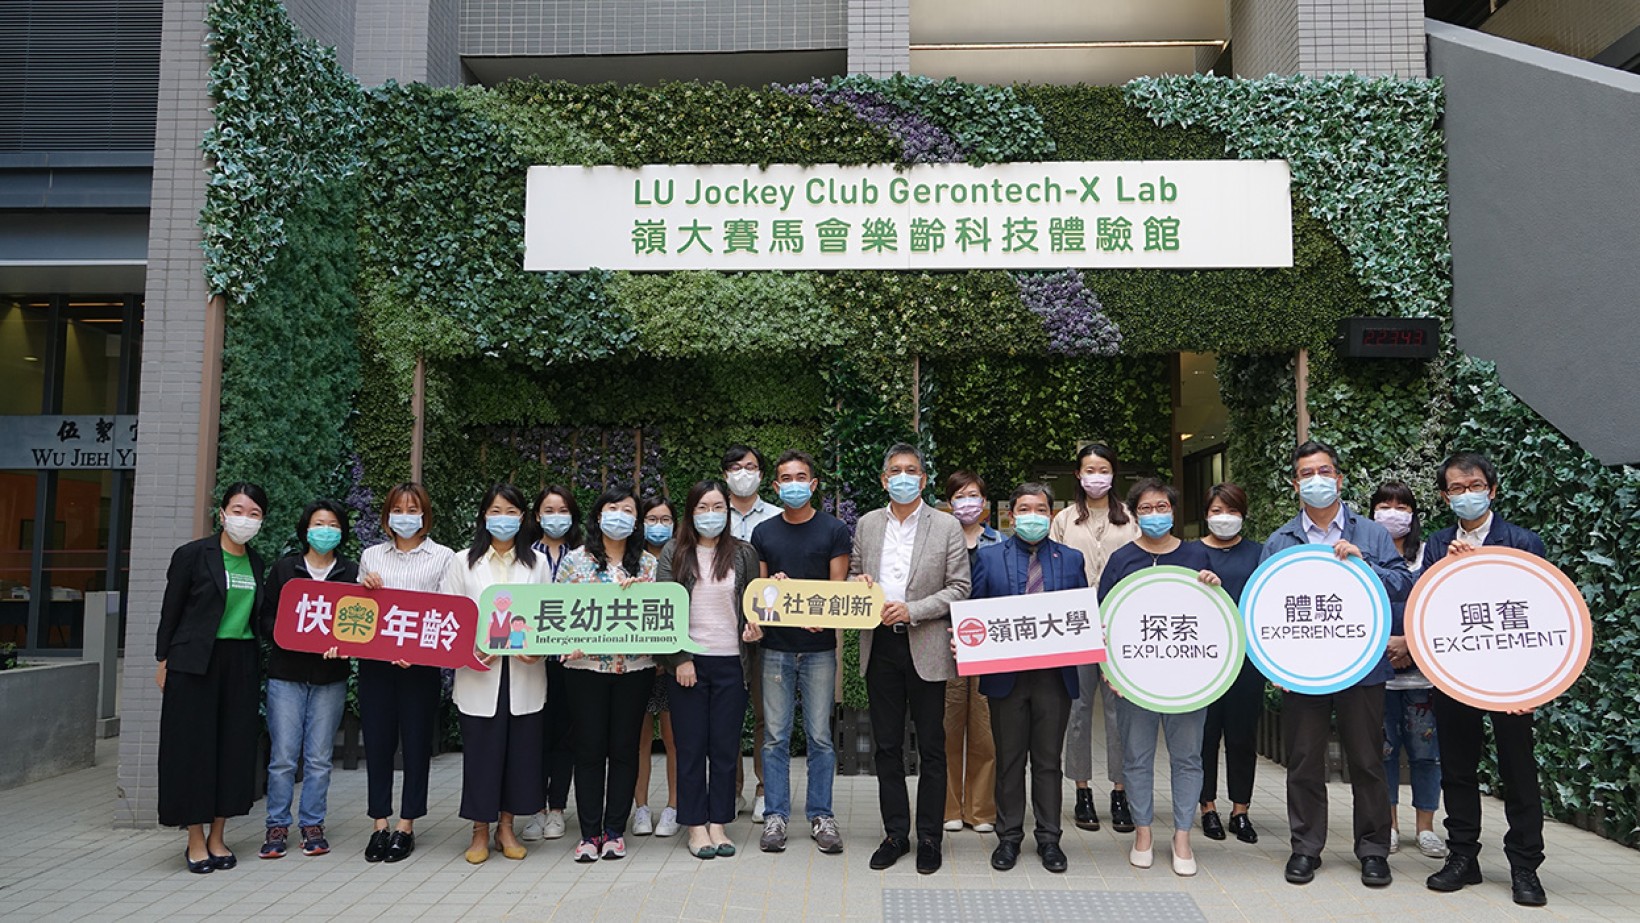 Members of Tuen Mun Healthy City visited Lingnan University and the LU Jockey Club Gerontech-X Lab